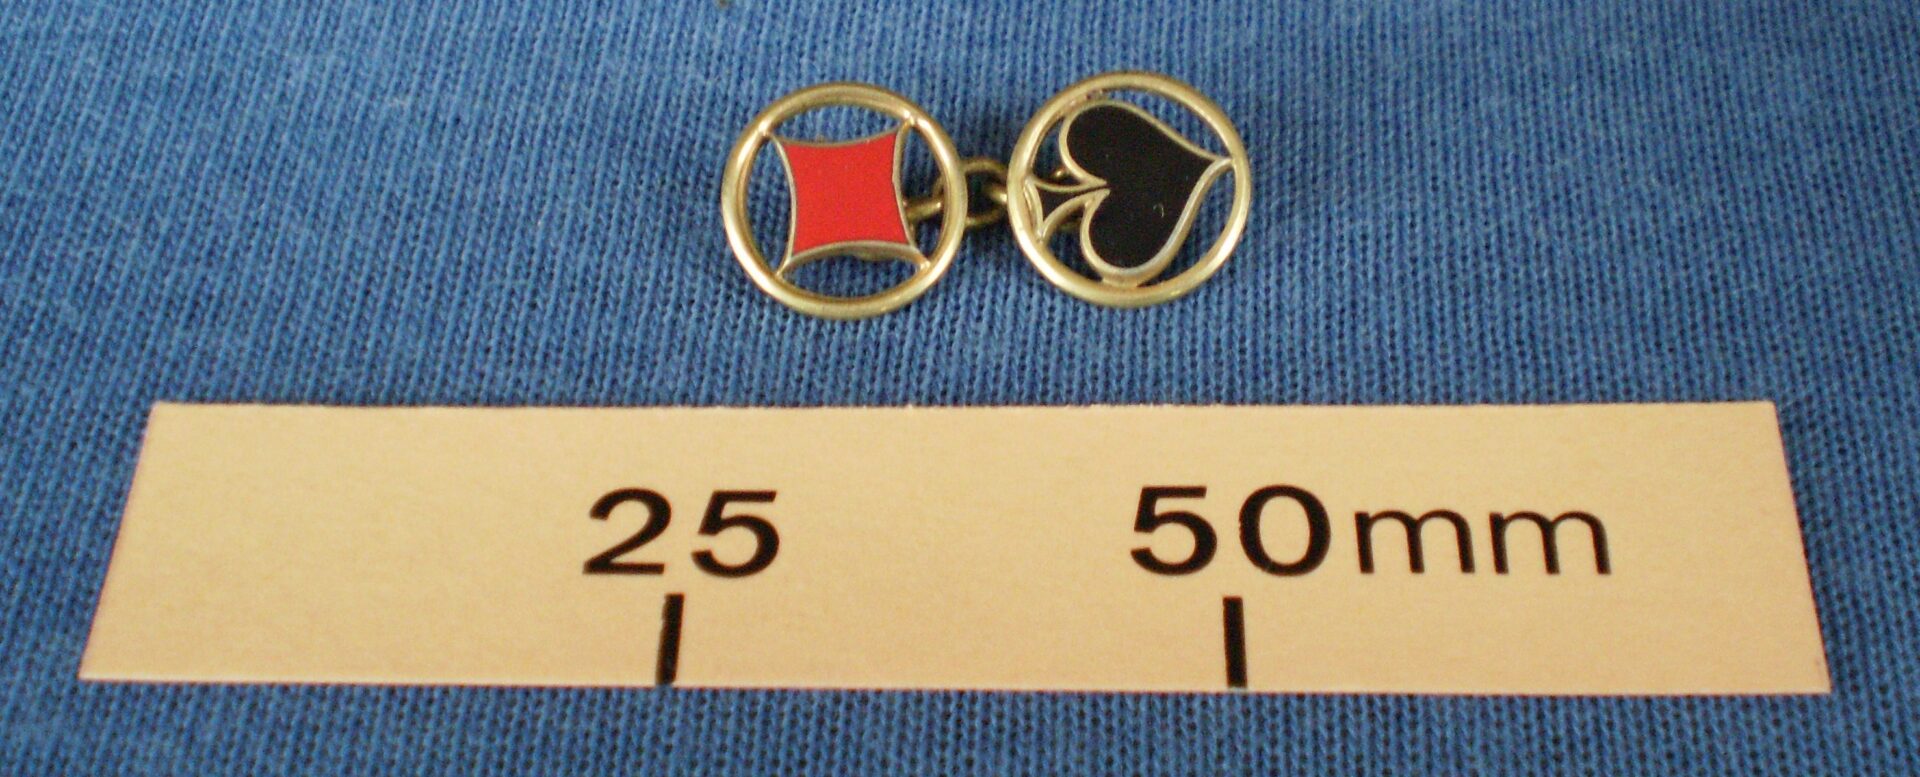 Single cufflink with diamond  & spade card motif